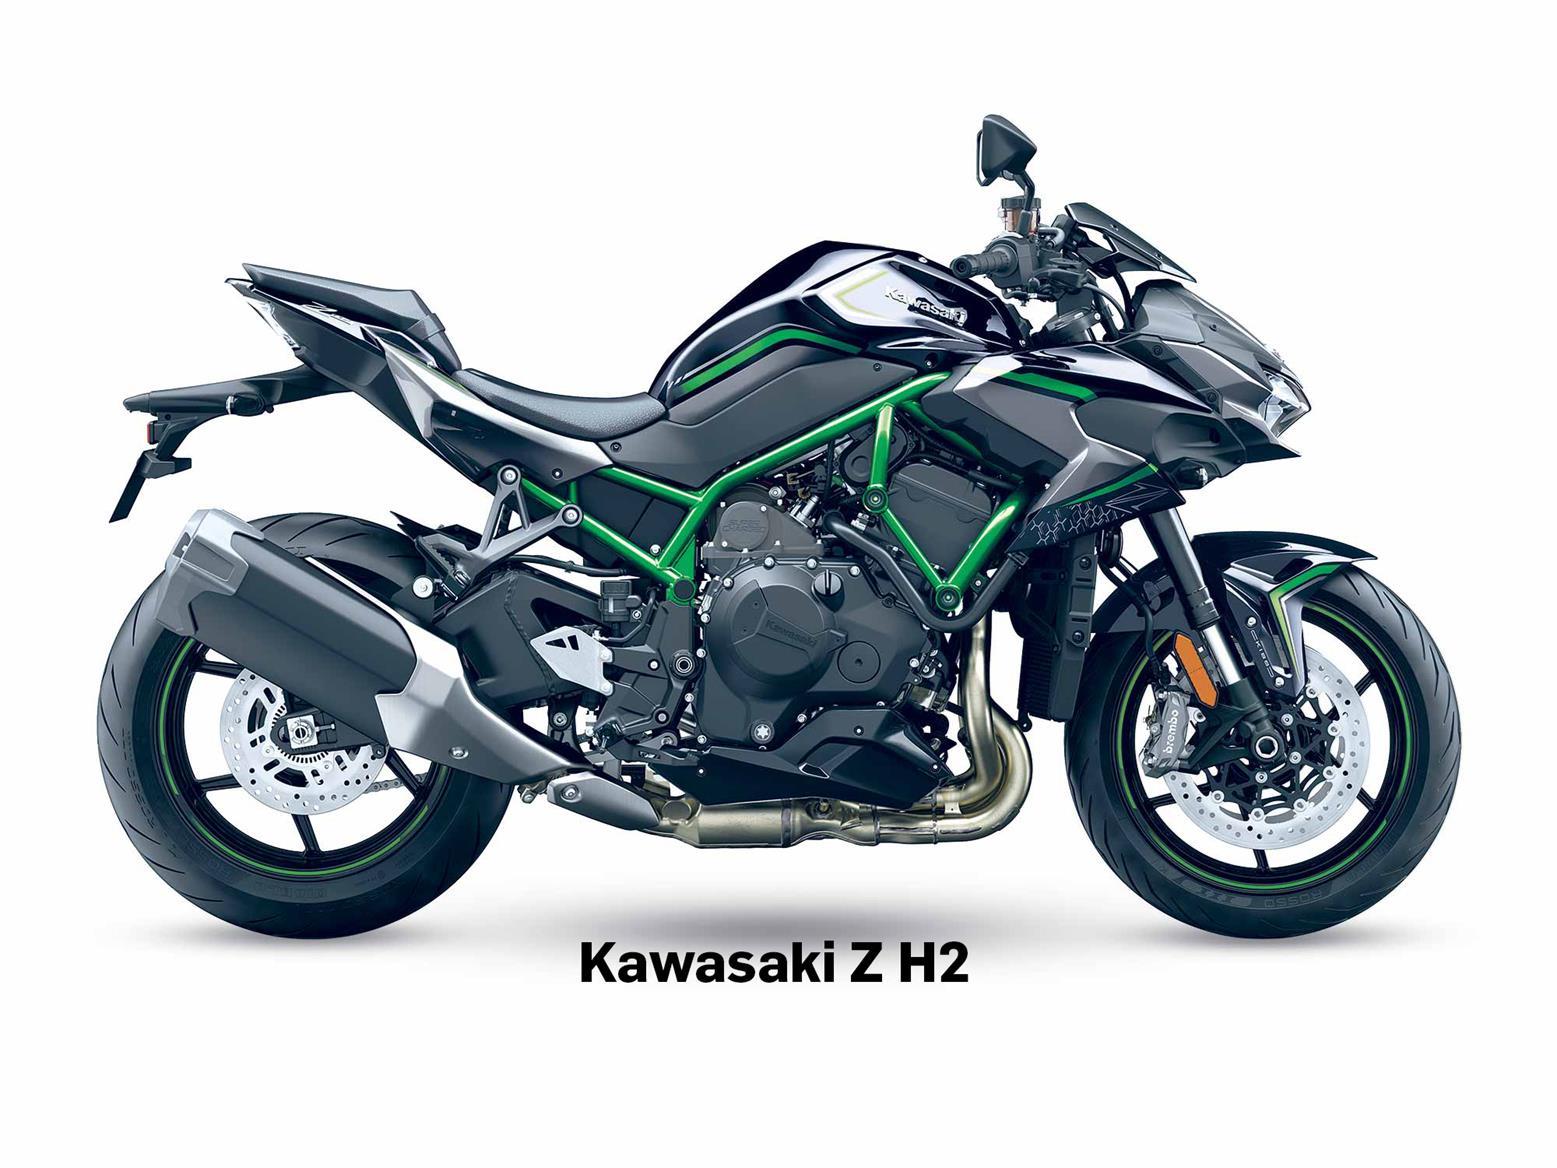 Read MCN's expert Kawasaki Z H2 long-term test here